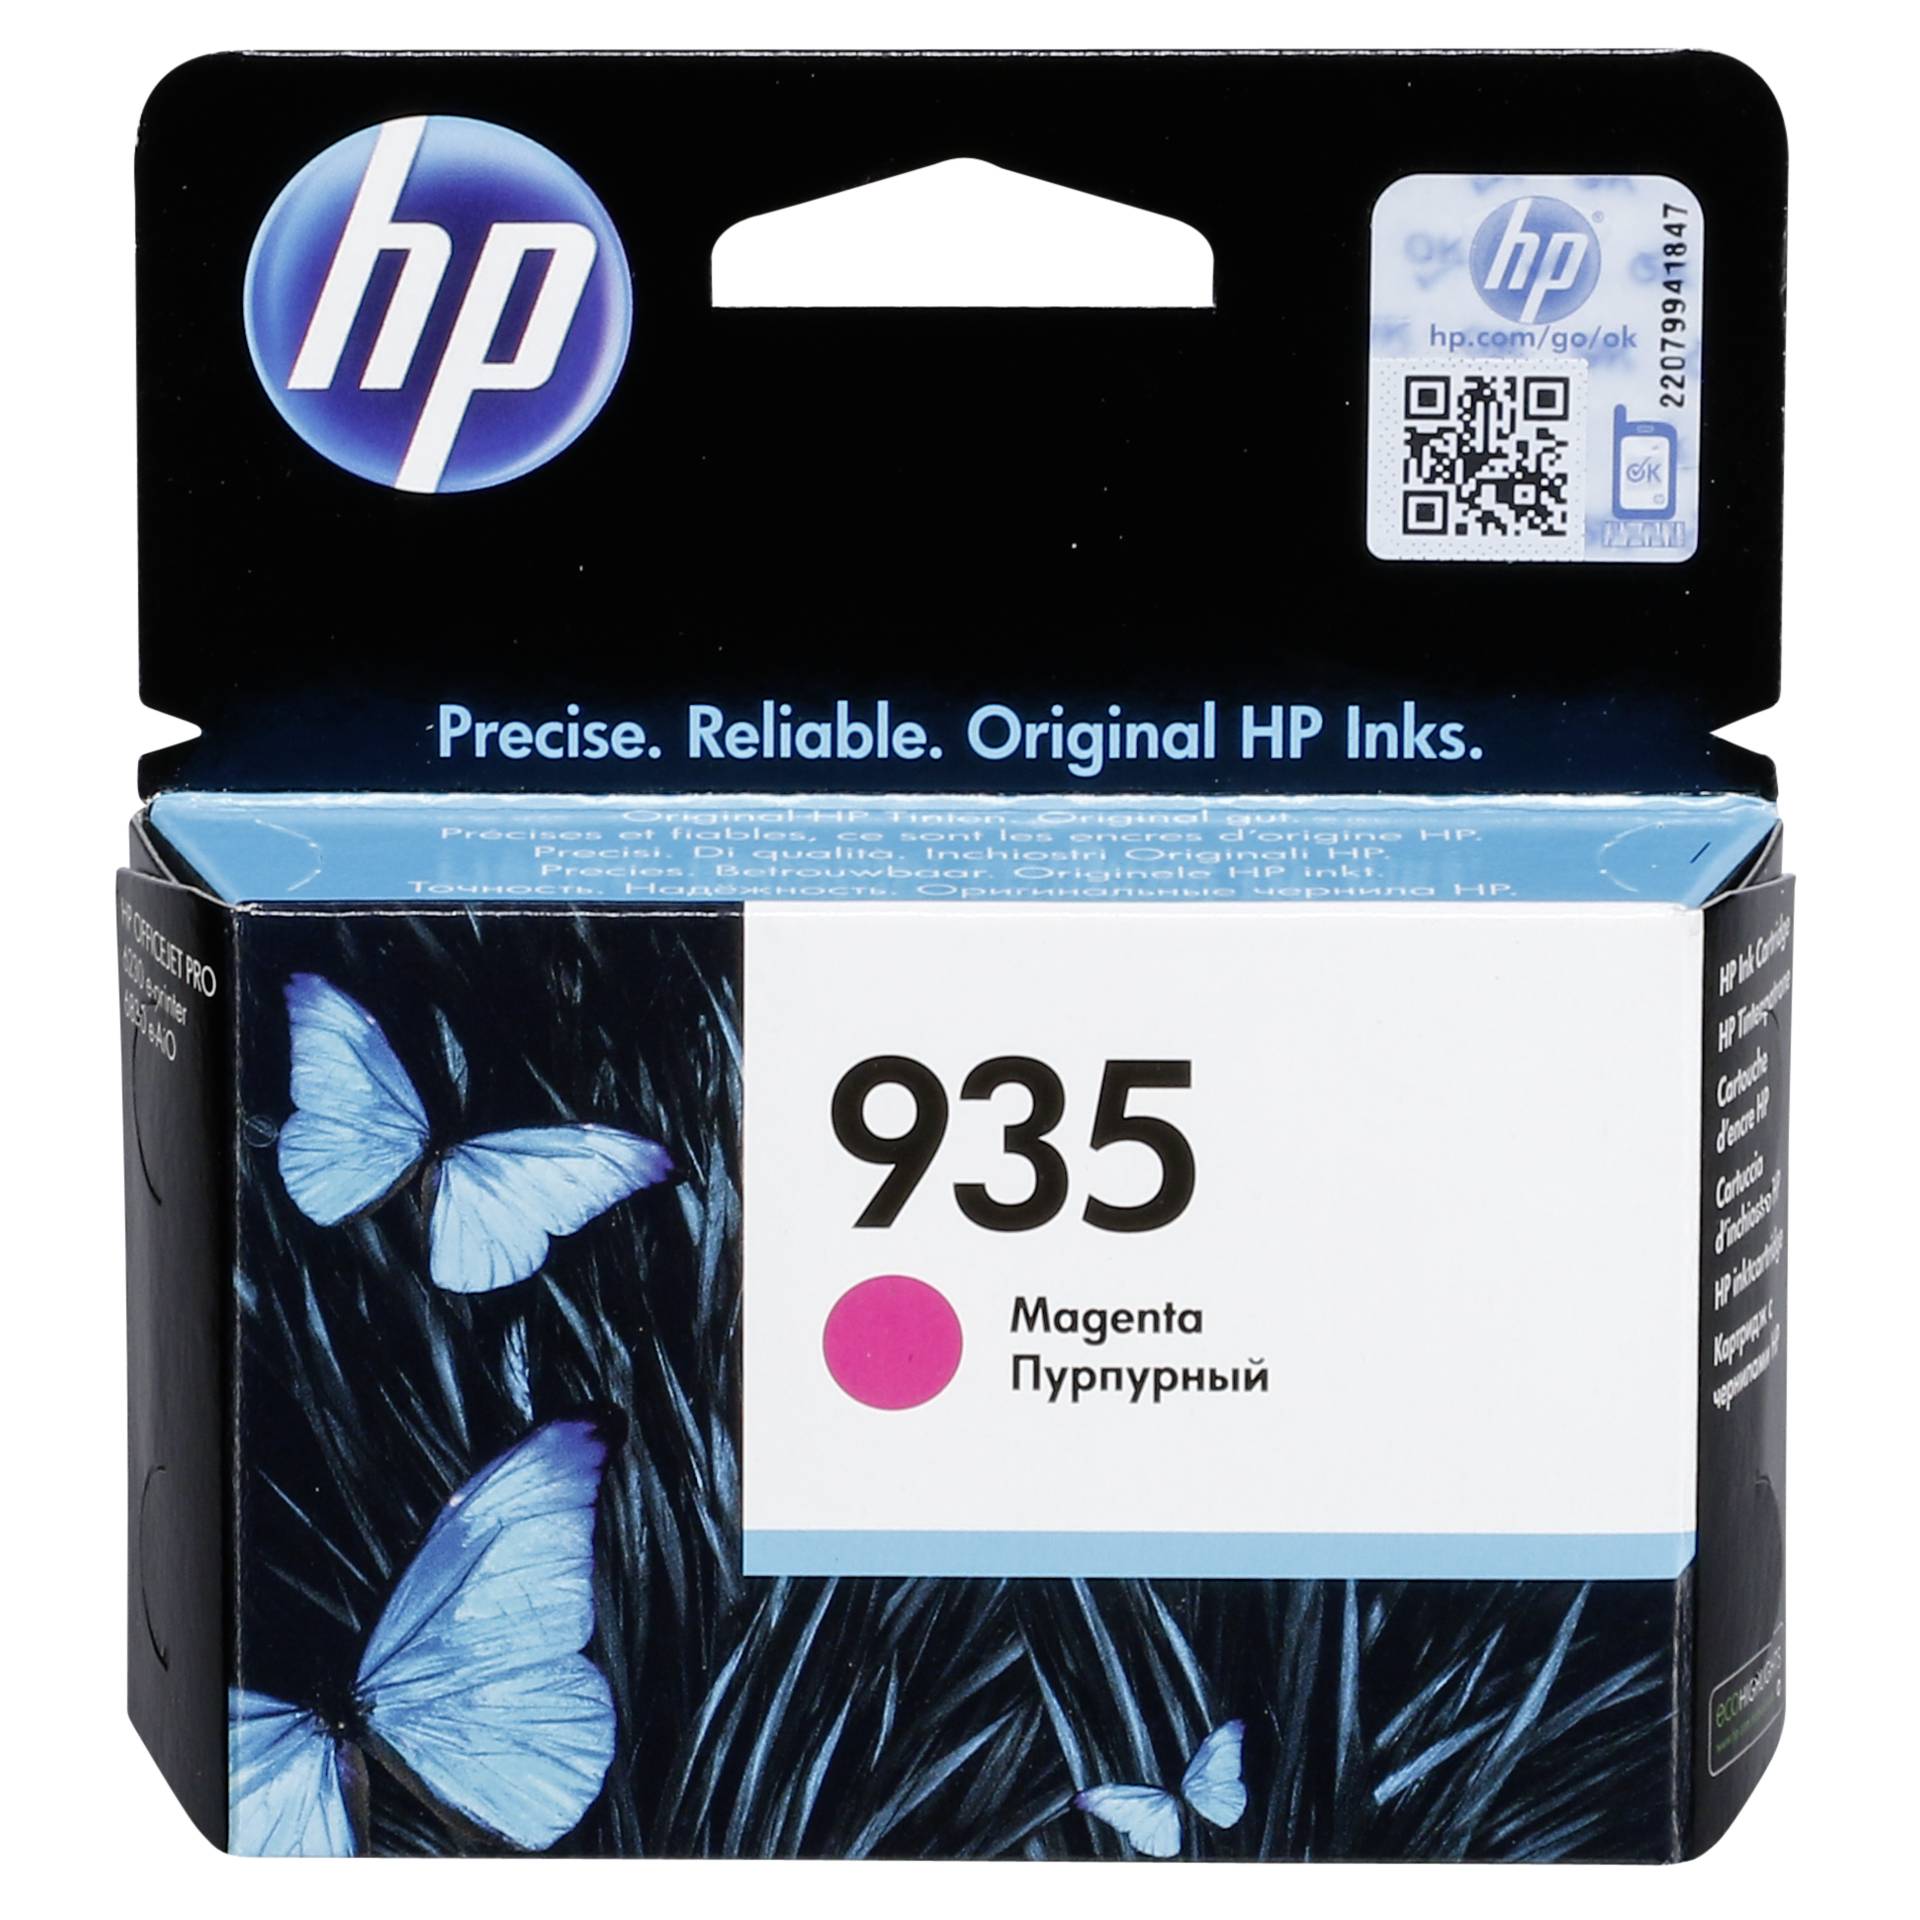 HP Tinte 935 magenta Original 400 Seiten